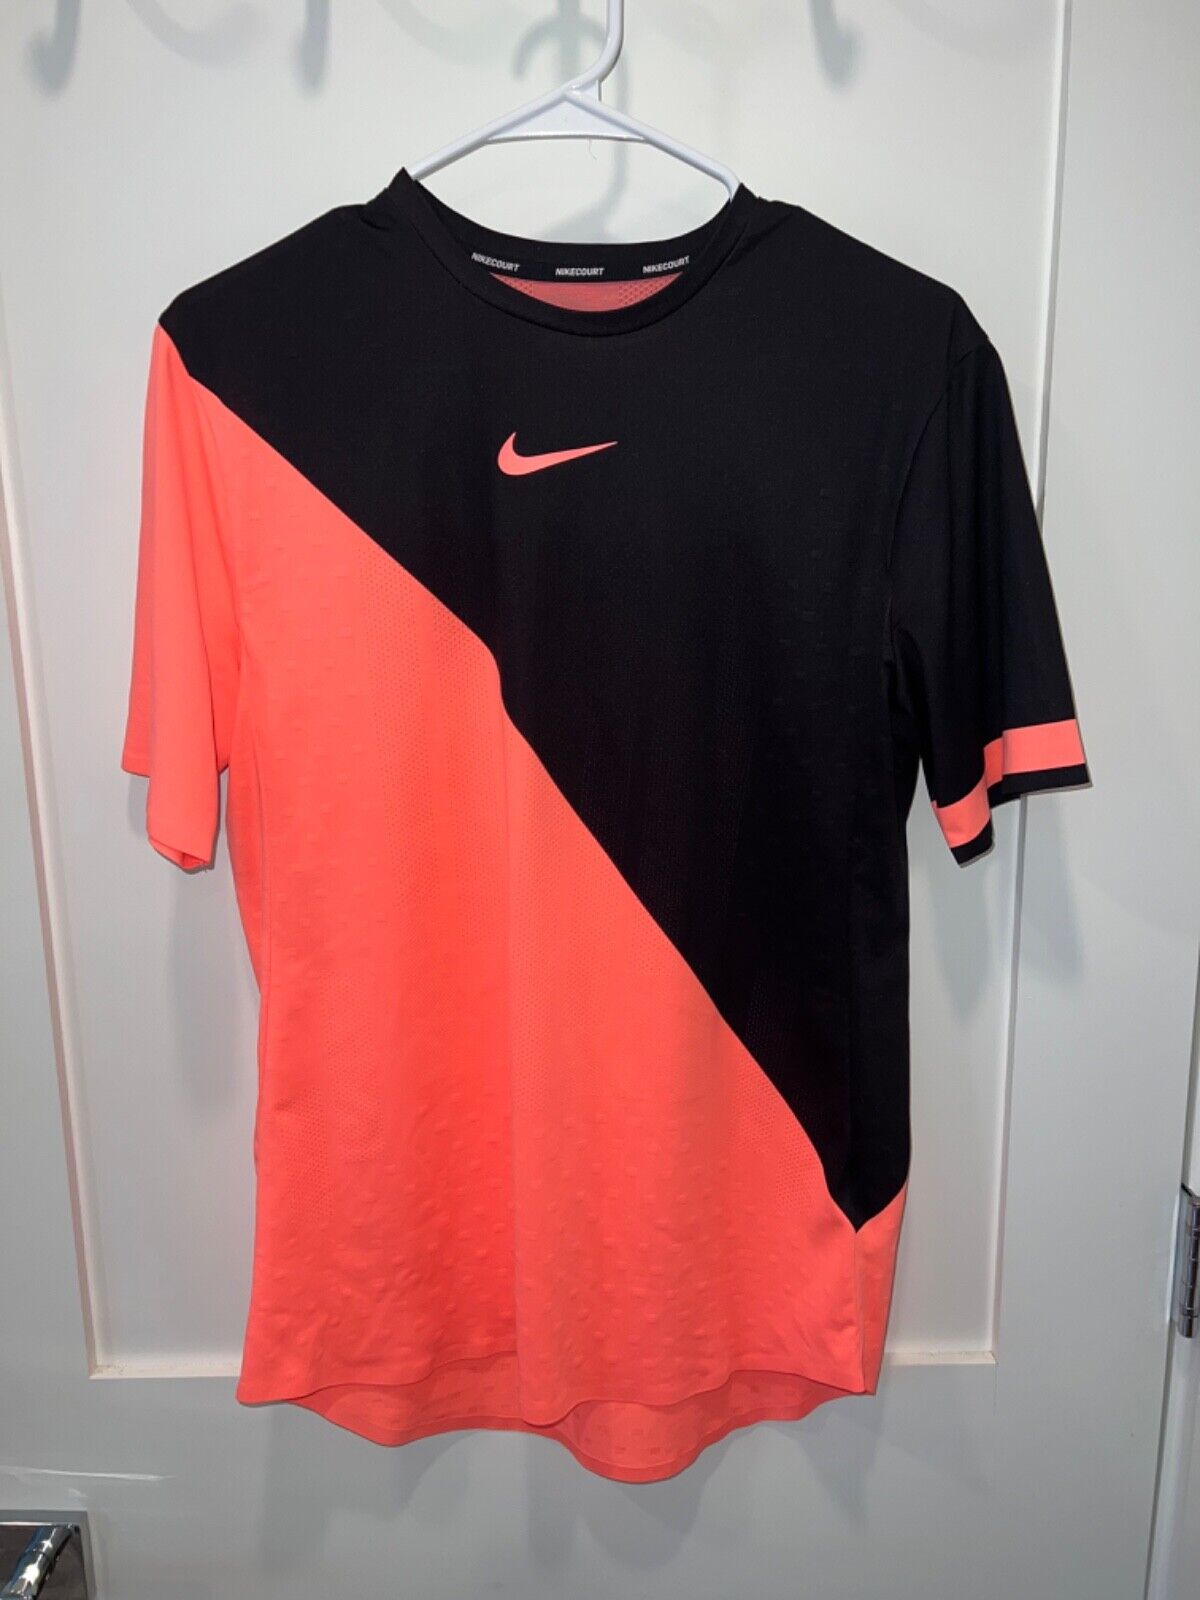 Men's Nike Tennis Zonal Top - Medium - 887513 eBay